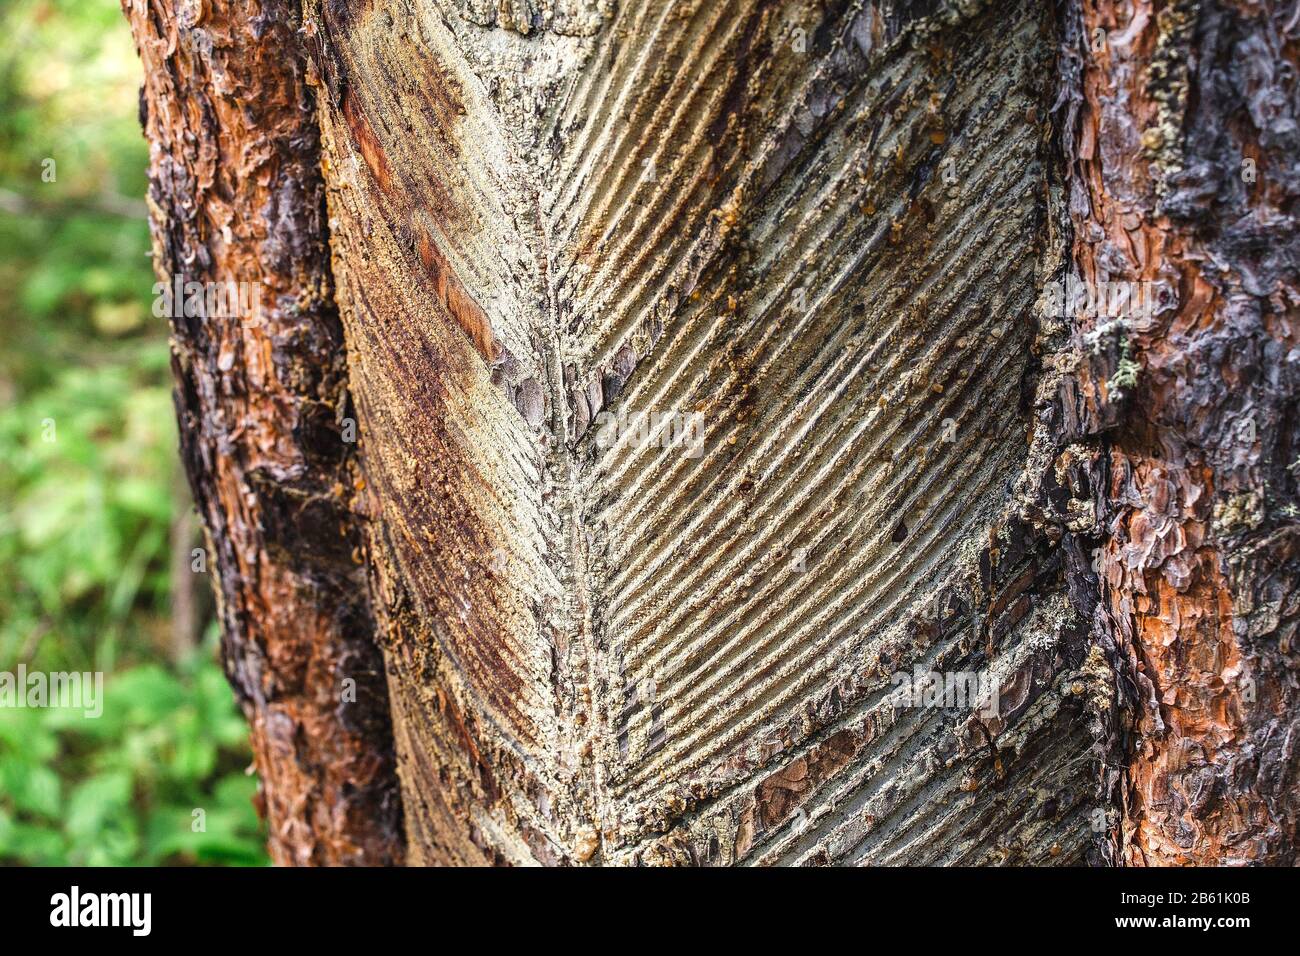 Harvesting pine resin from bleeding trees, Uganda Stock Photo - Alamy